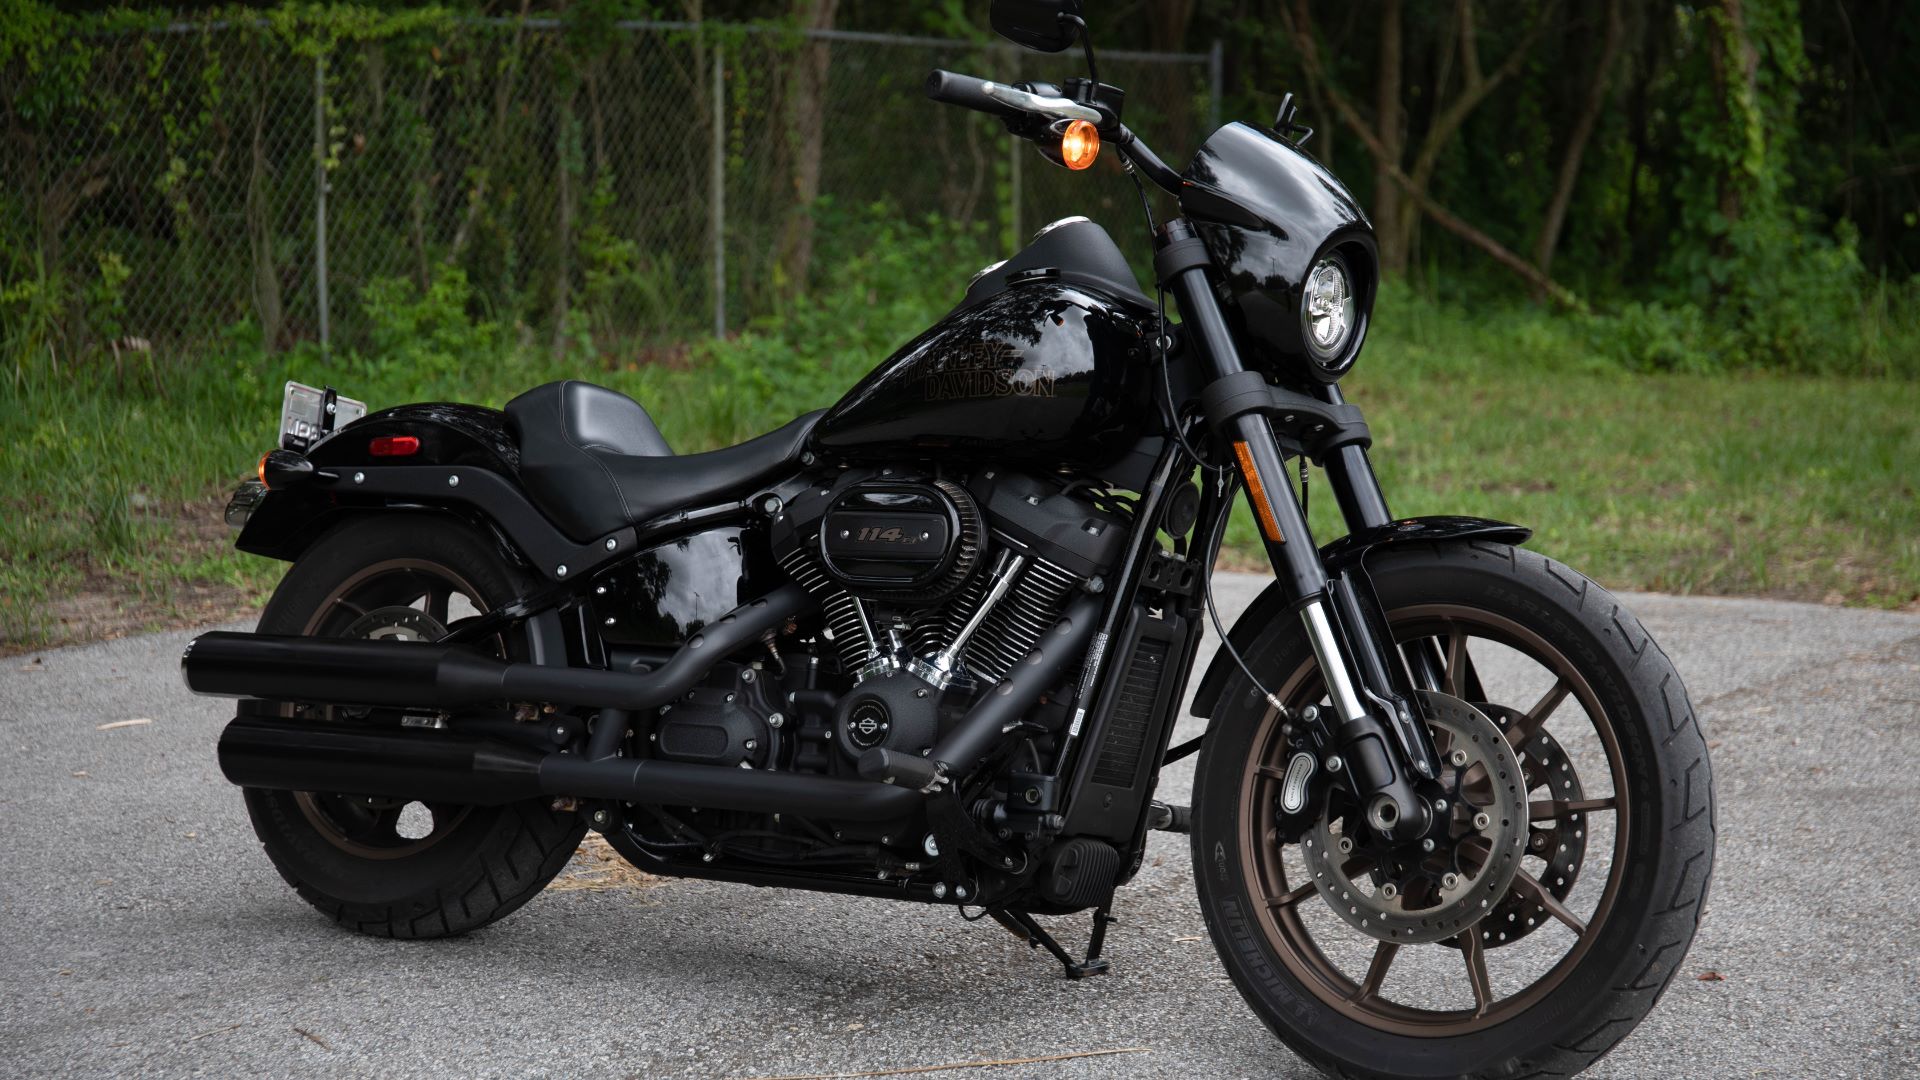 Used 2020 Harley Davidson Low Rider S Motorcycles In Lakeland Fl Stock Number Har026030